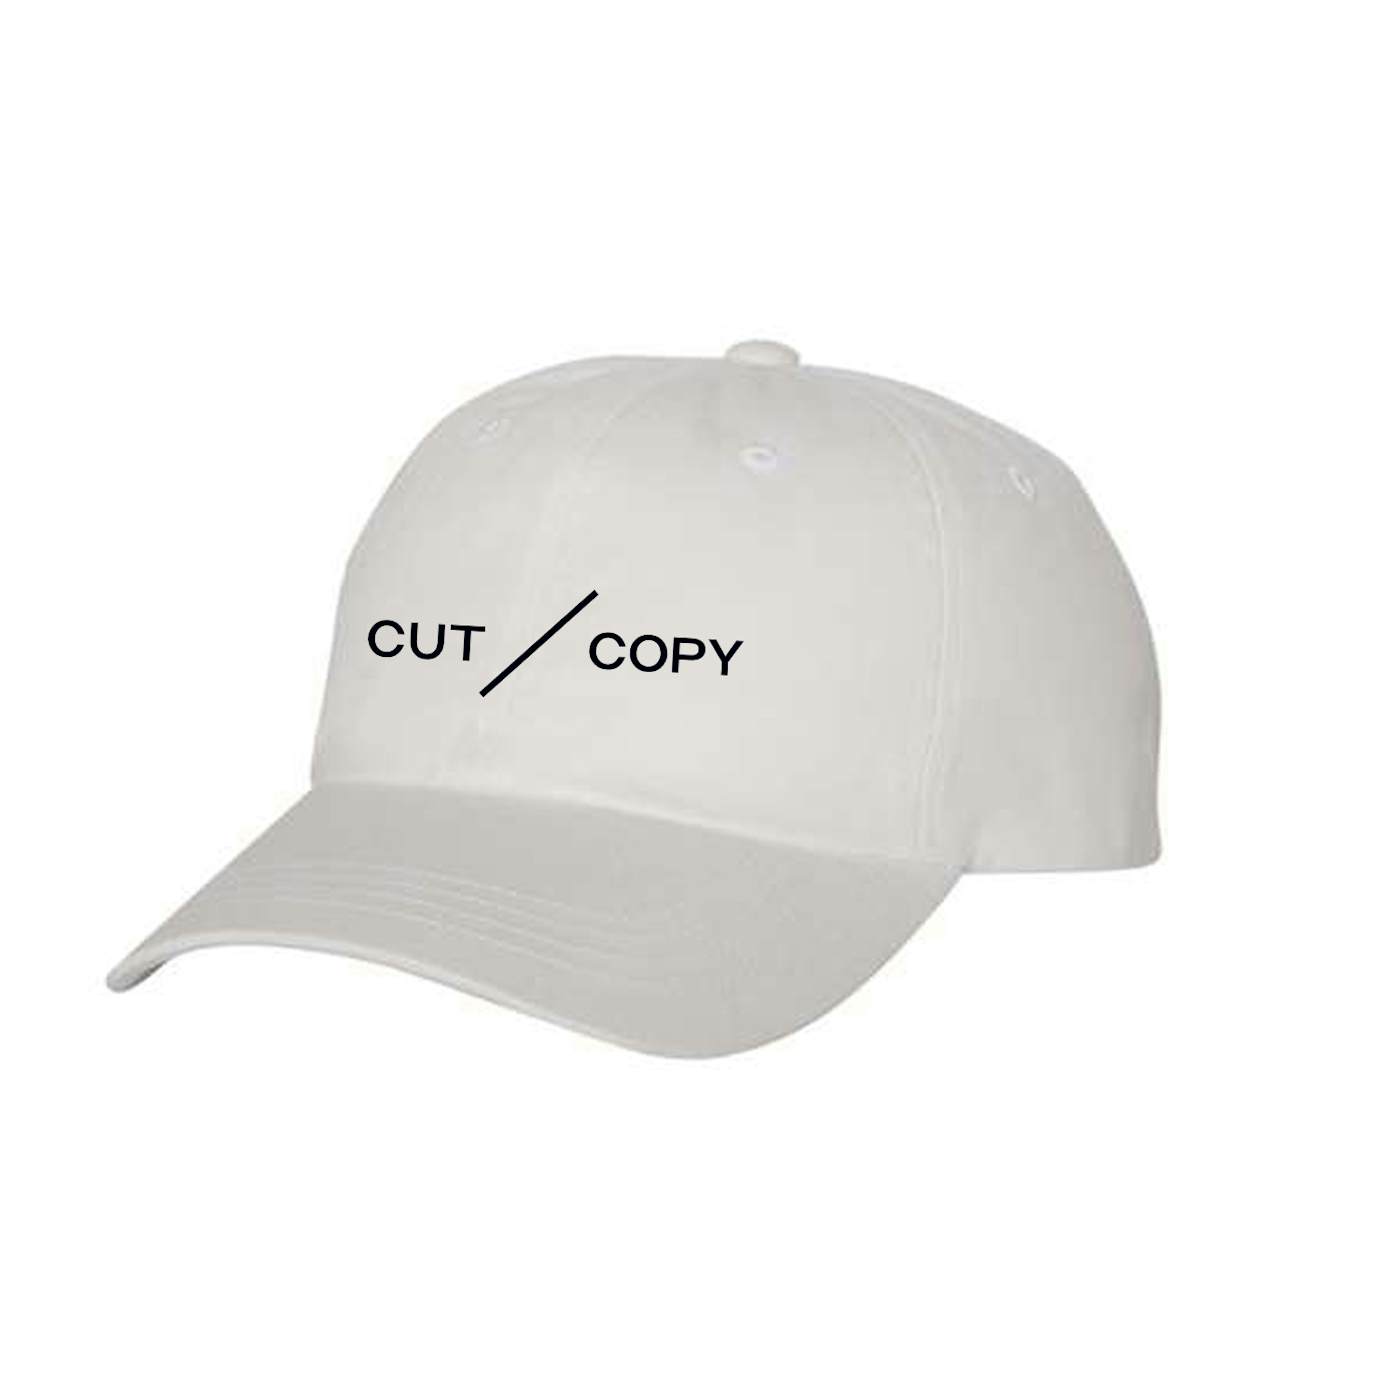 Cut Copy White Hat